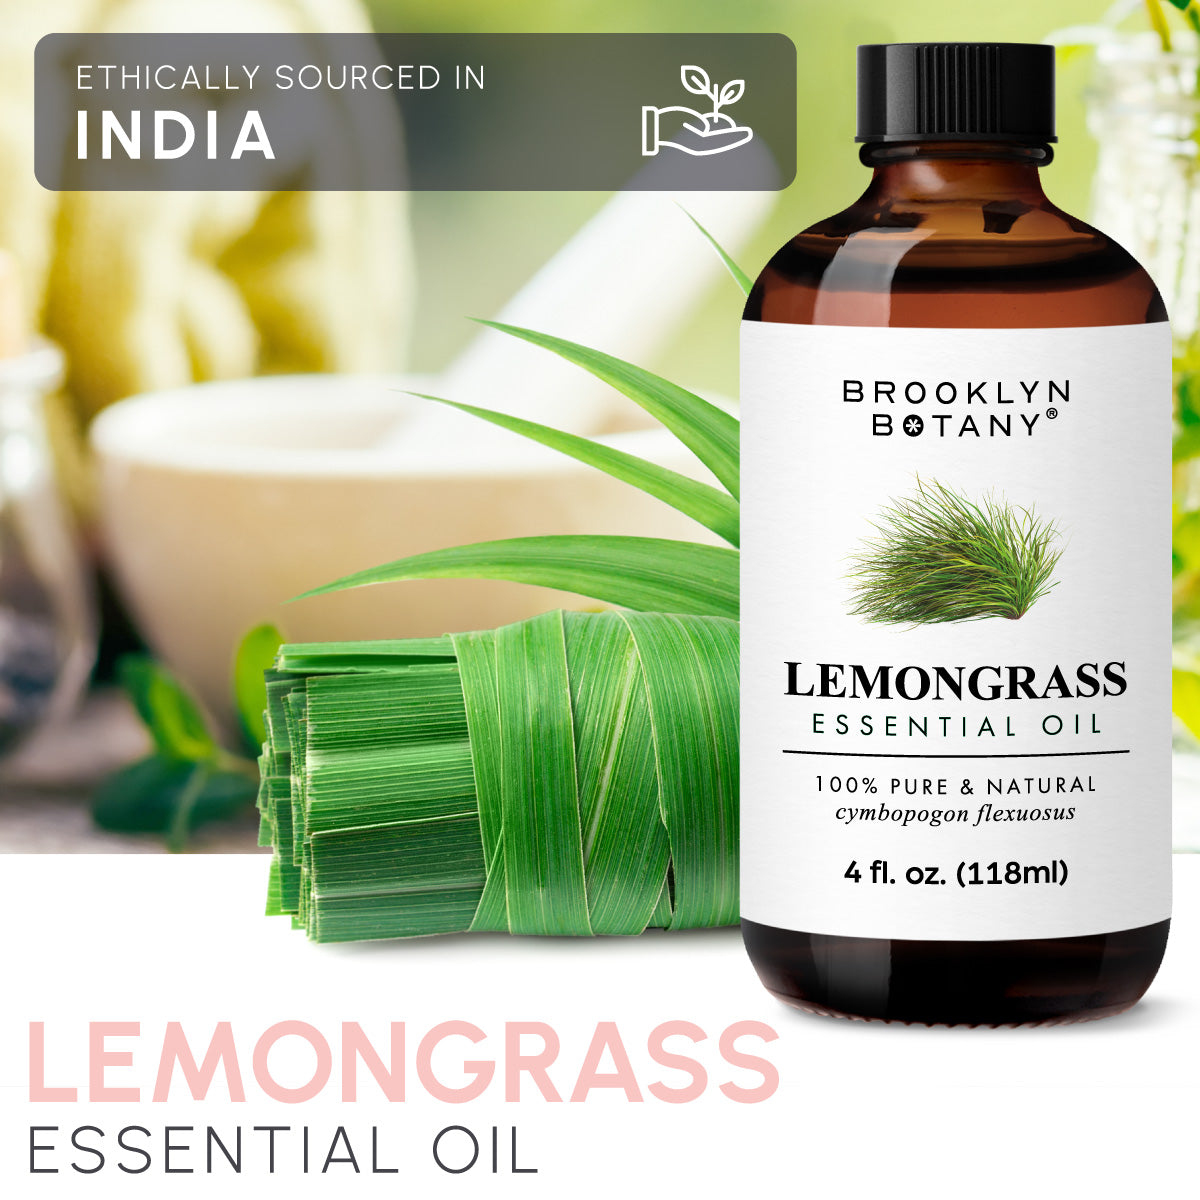 Majestic Pure Lemongrass Essential Oil, Therapeutic Grade, Pure and Natural Premium Quality Oil, 4 fl oz